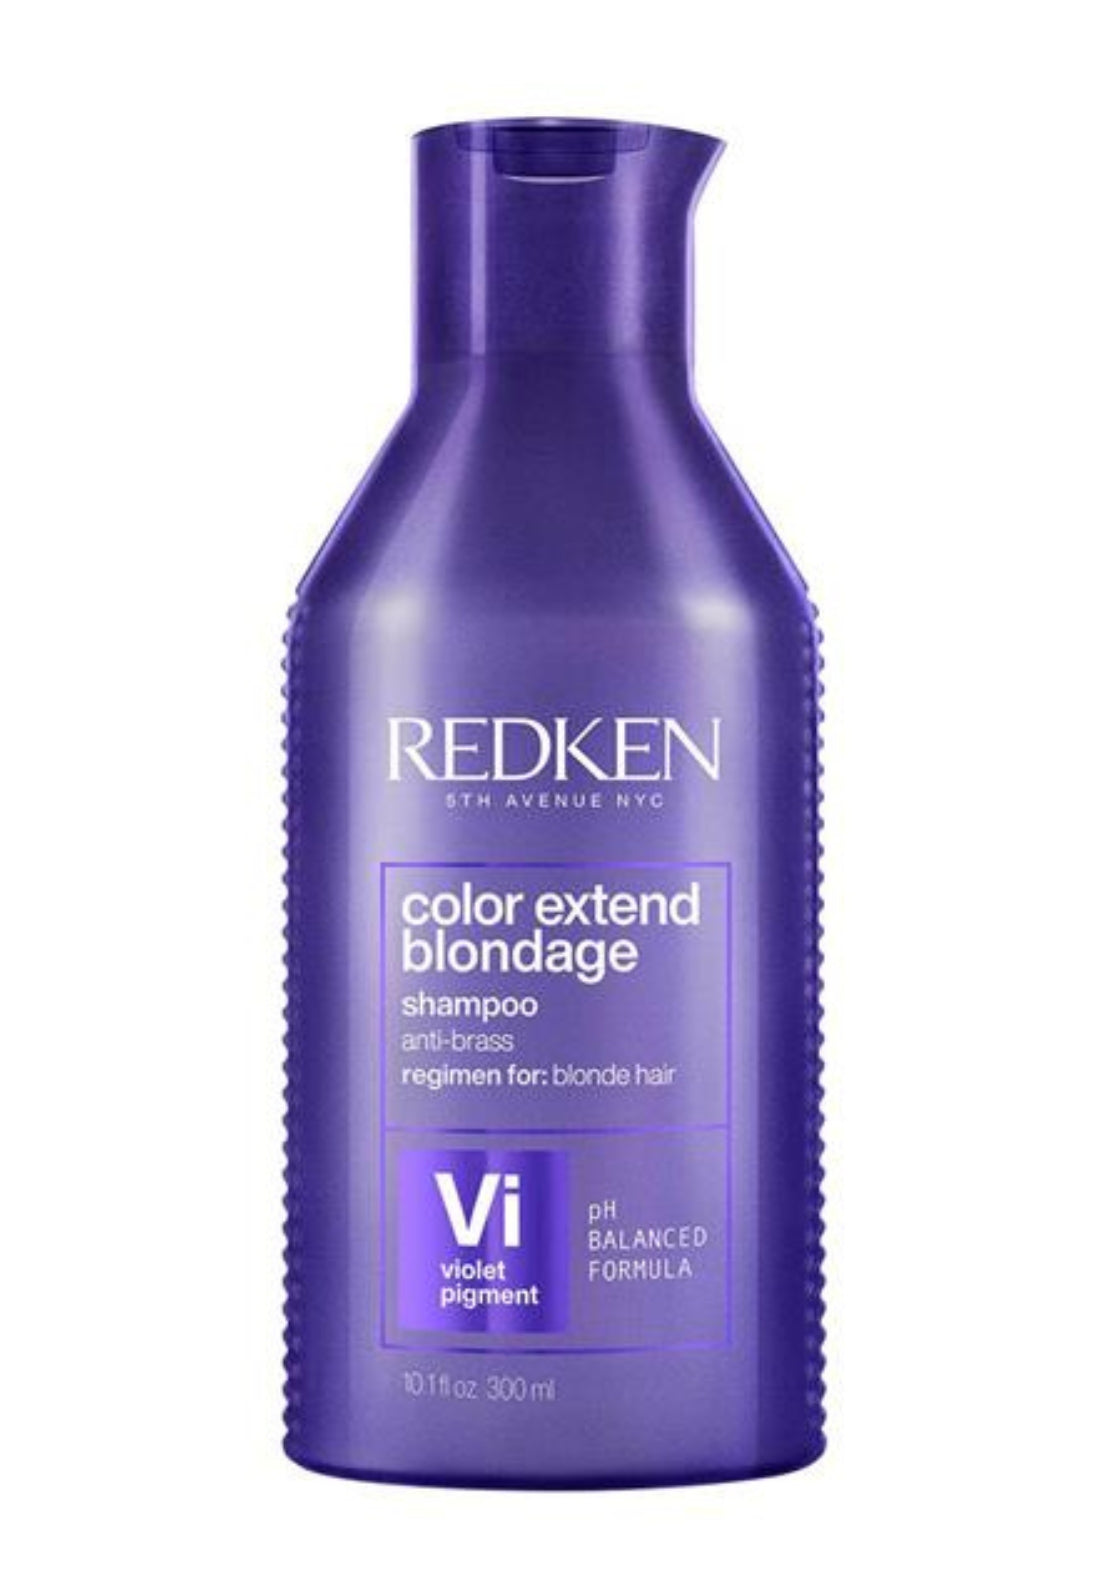 Redken Redken Shampoo Color Blondage 300ml 1 Shaws Department Stores